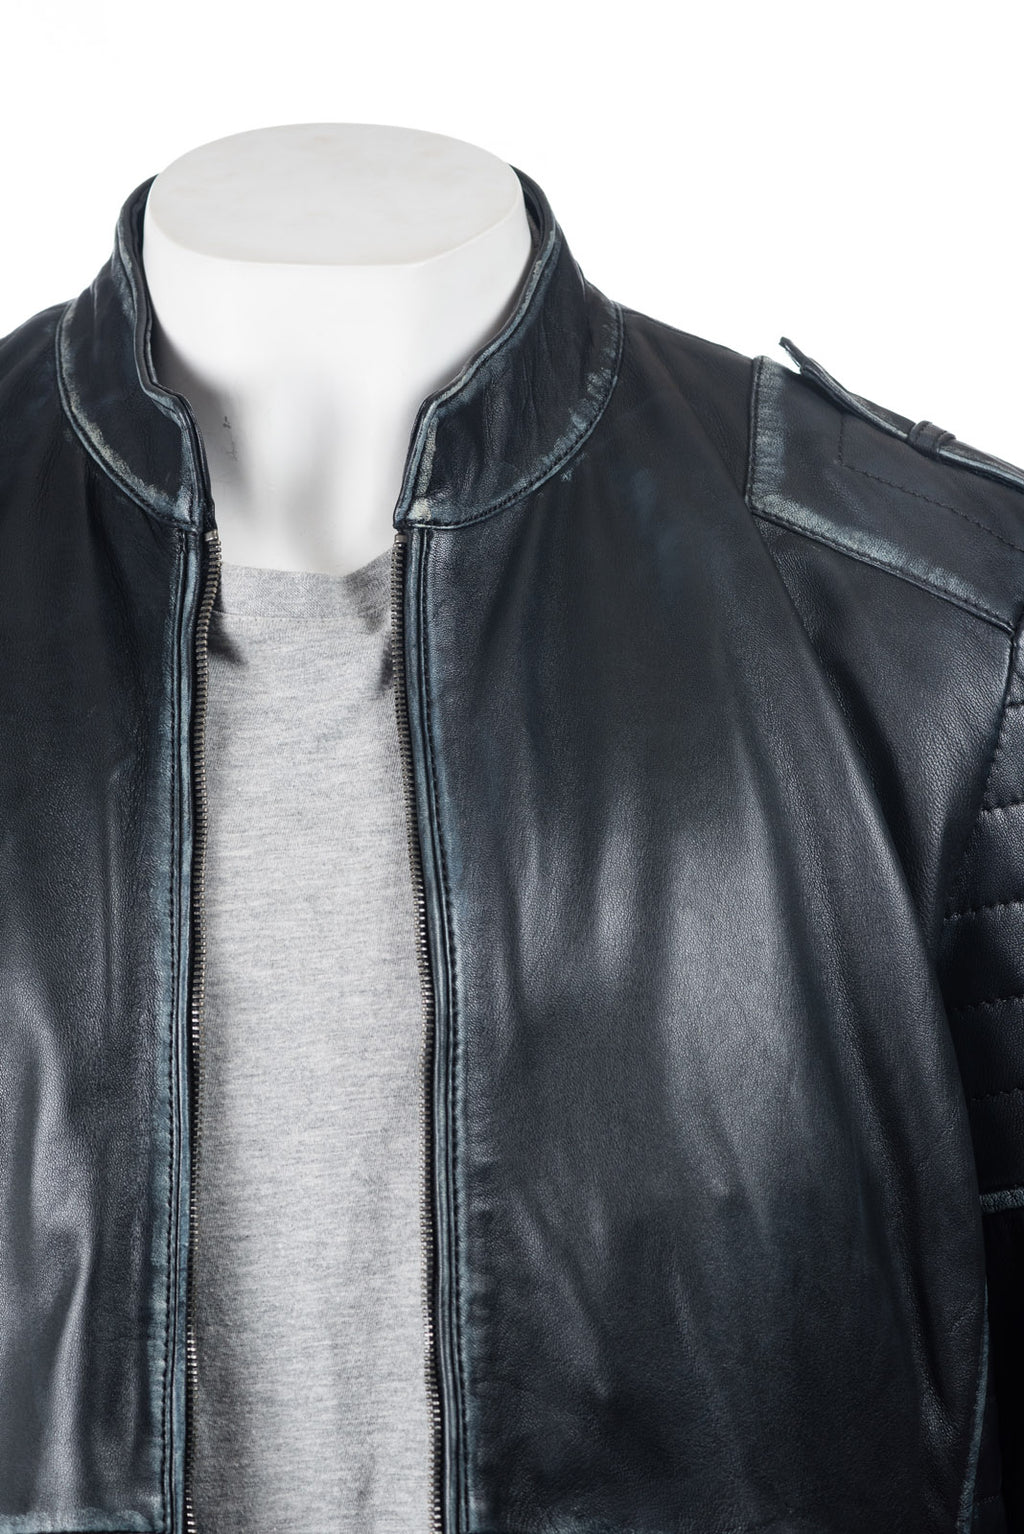 Men's Black Distressed Collarless Biker Style Leather Jacket: Uriel